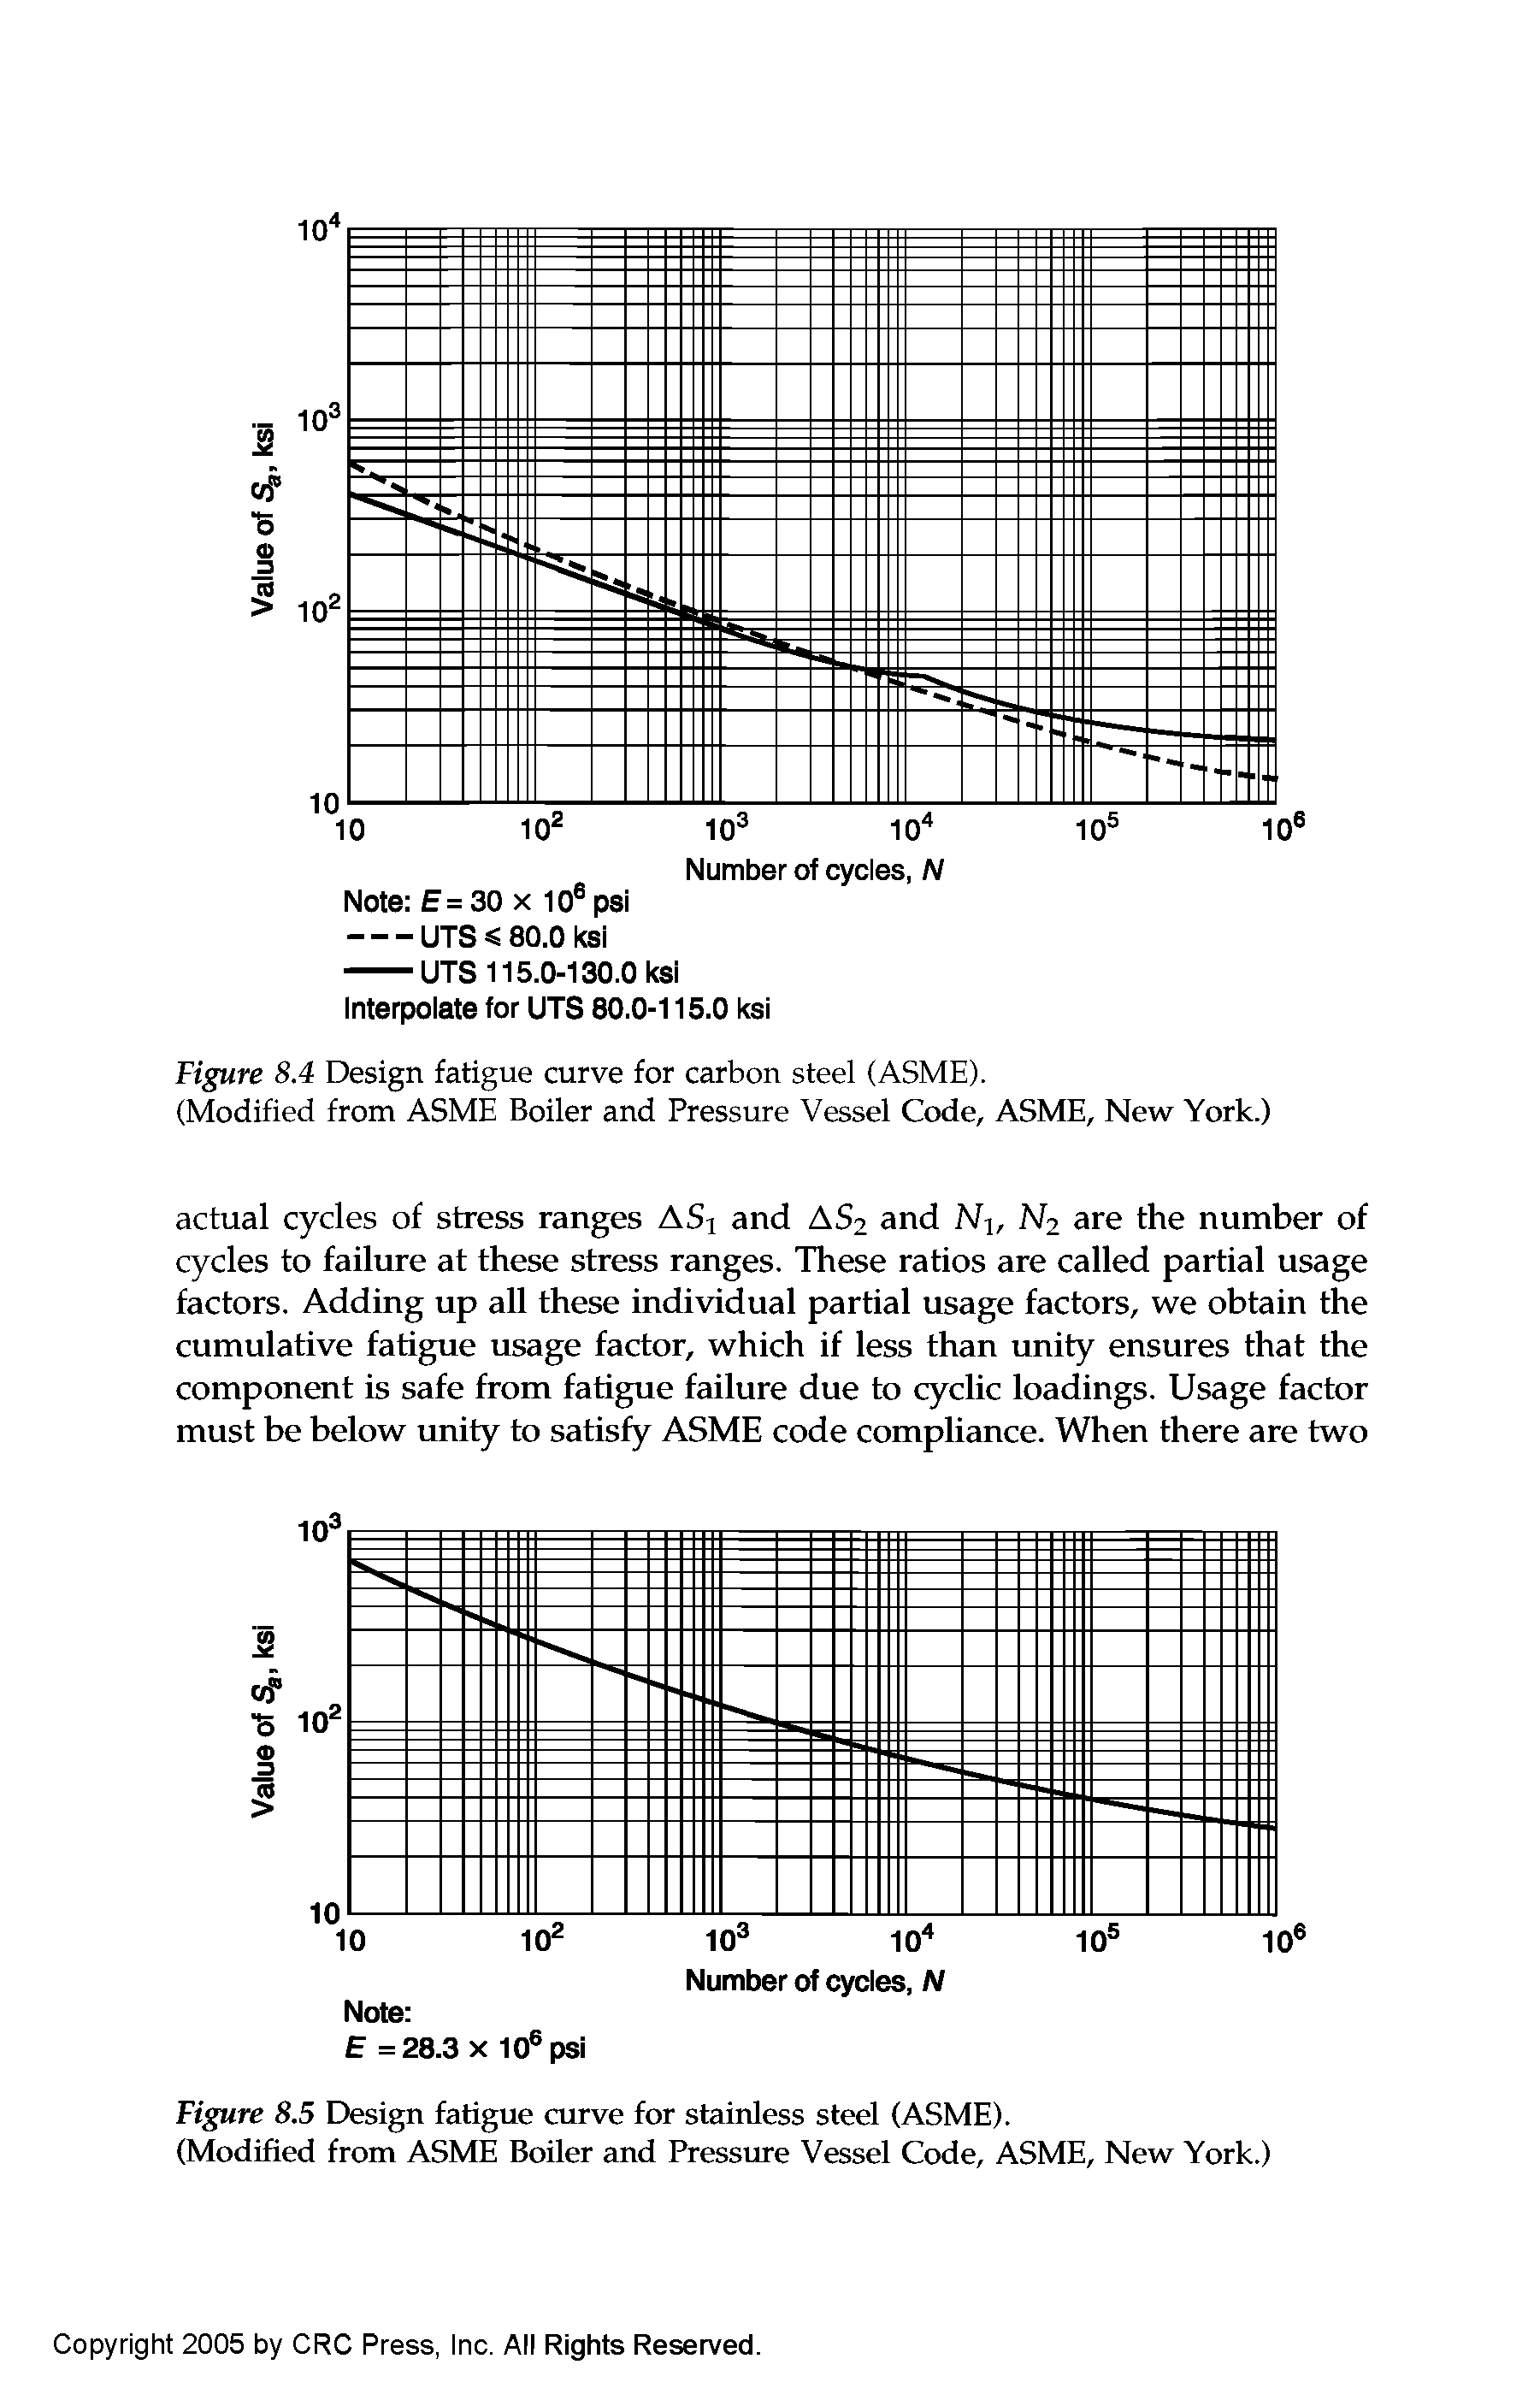 Figure 8.4 Design fatigue curve for carbon steel (ASME).